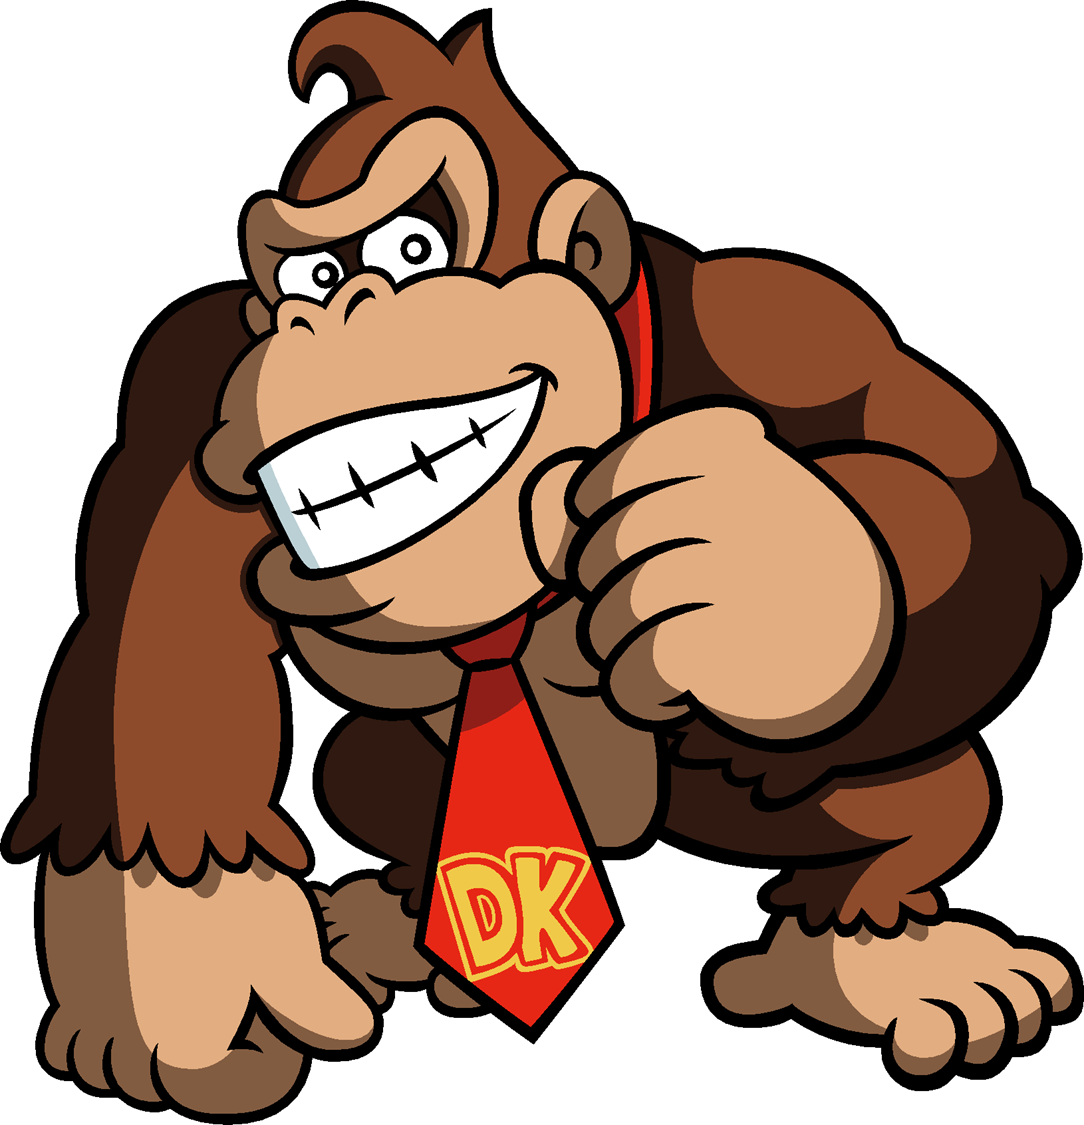 Donkey Kong images Transparentes - PNG Play